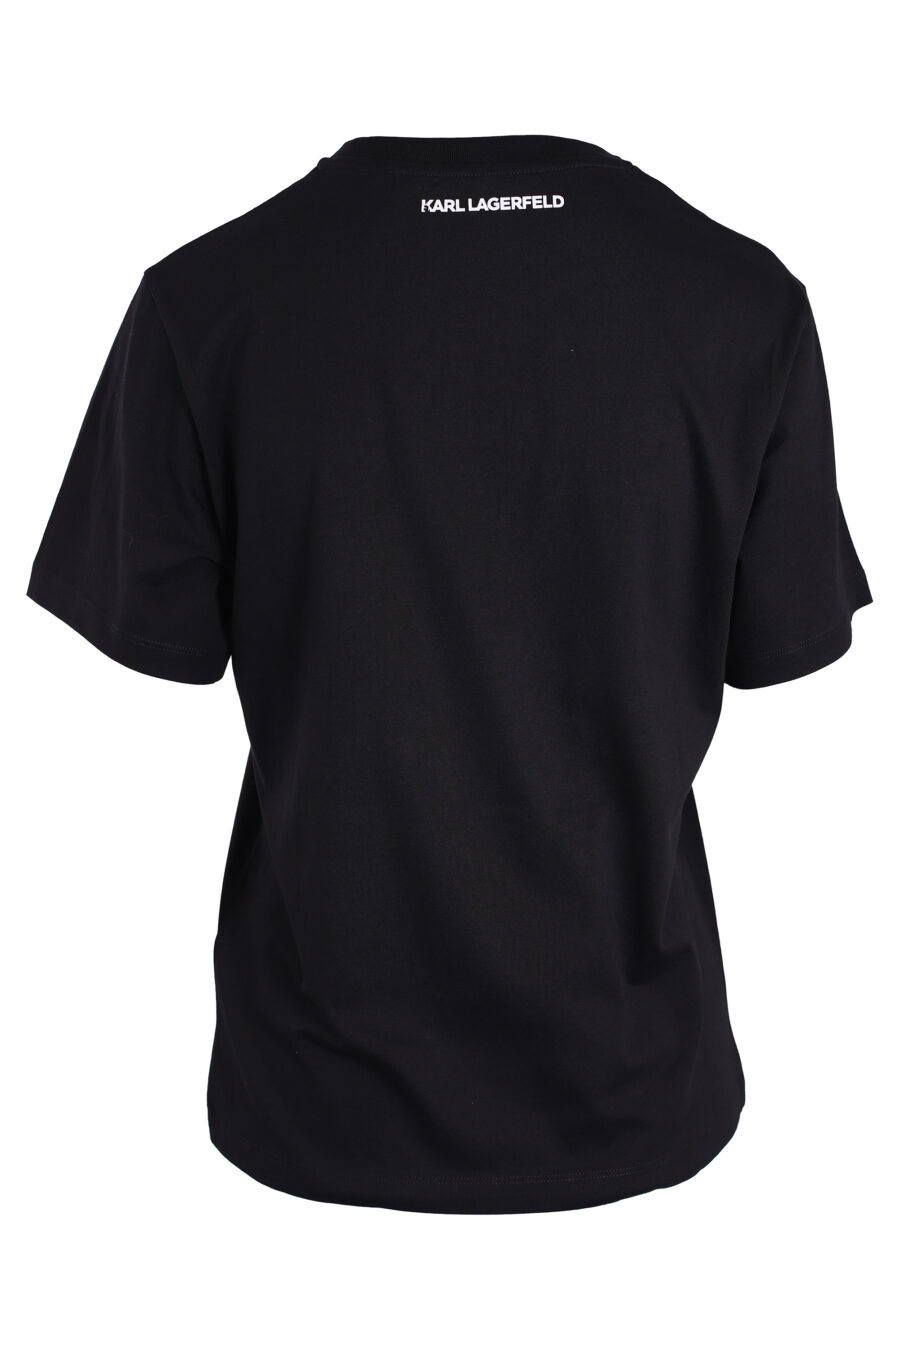 Camiseta negra con logo redondo blanco y verde "paris" - IMG 3358